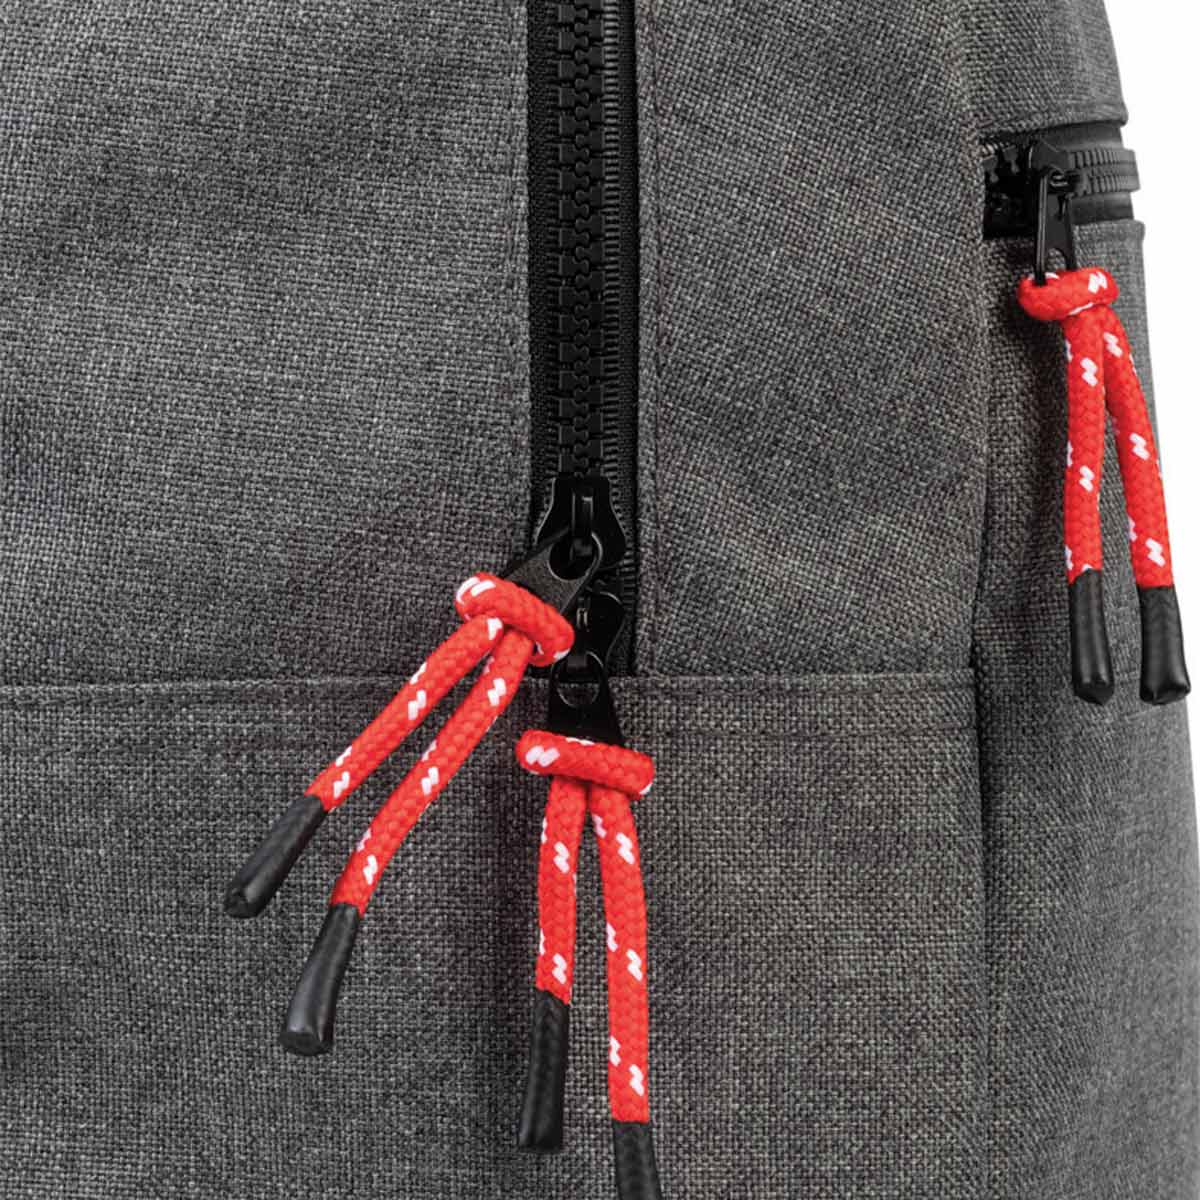 GEWO Backpack Spy grey/red